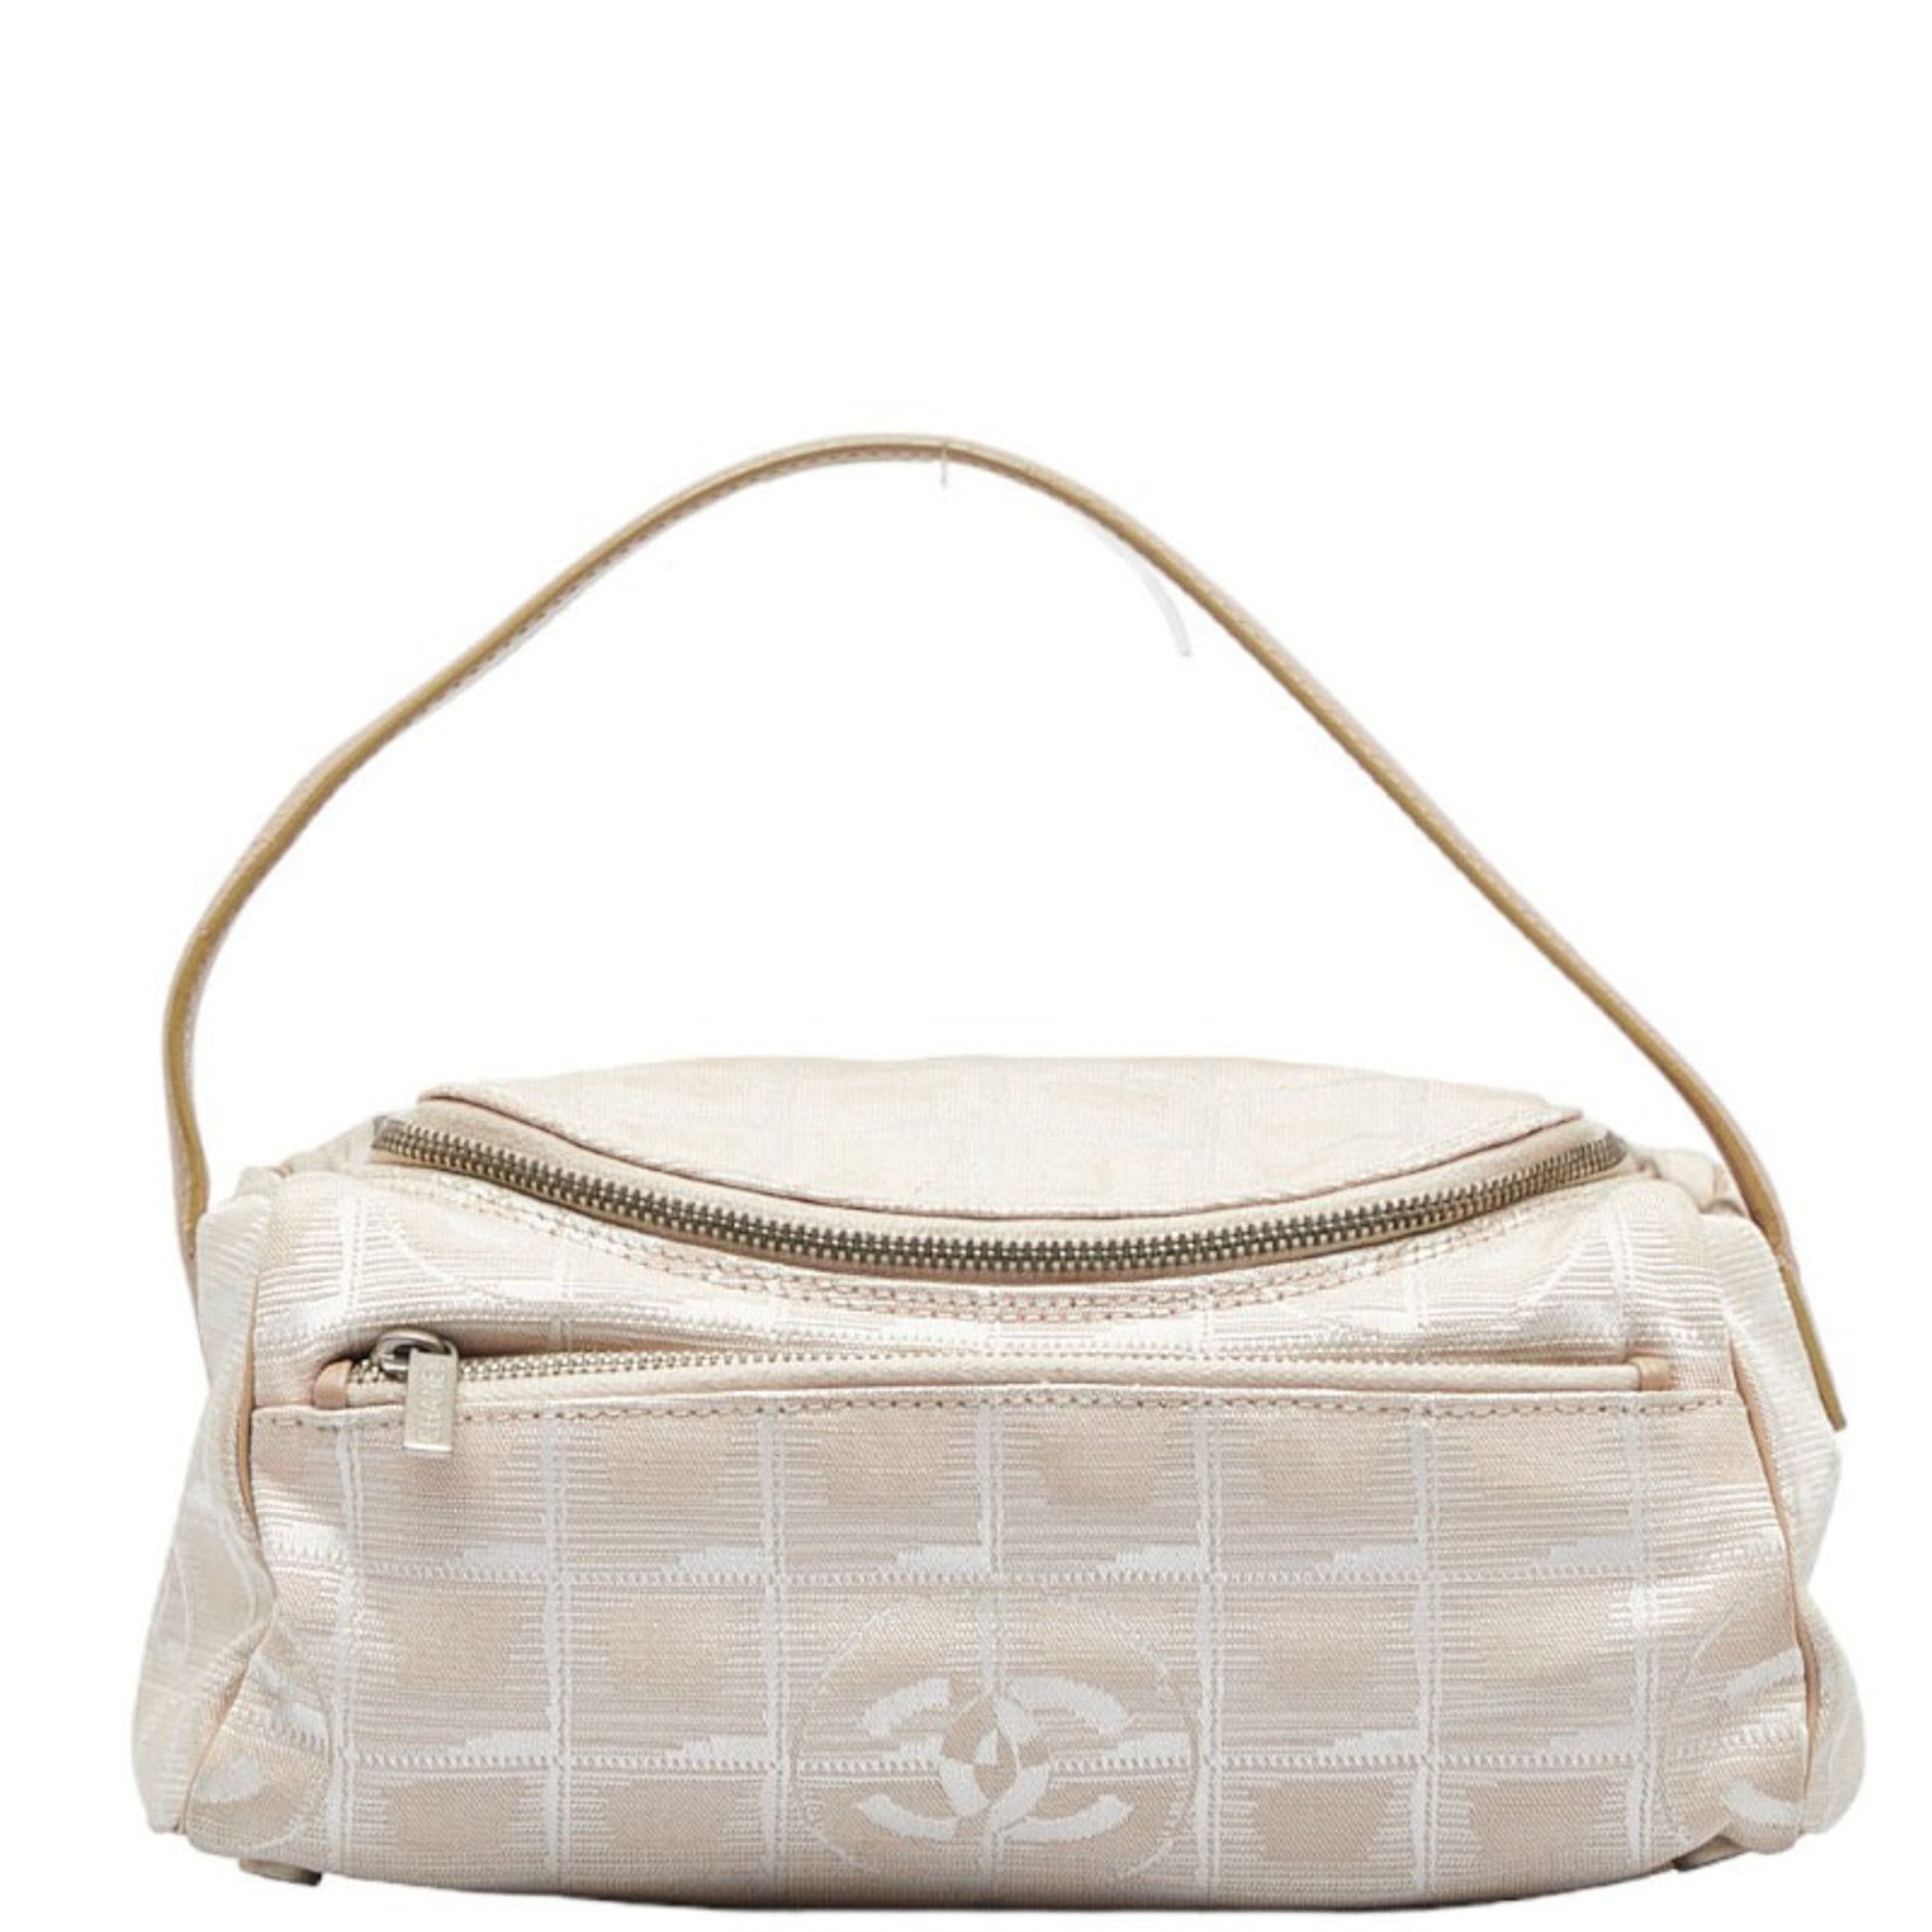 CHANEL New Line Coco Mark Vanity Bag Handbag Beige Leather